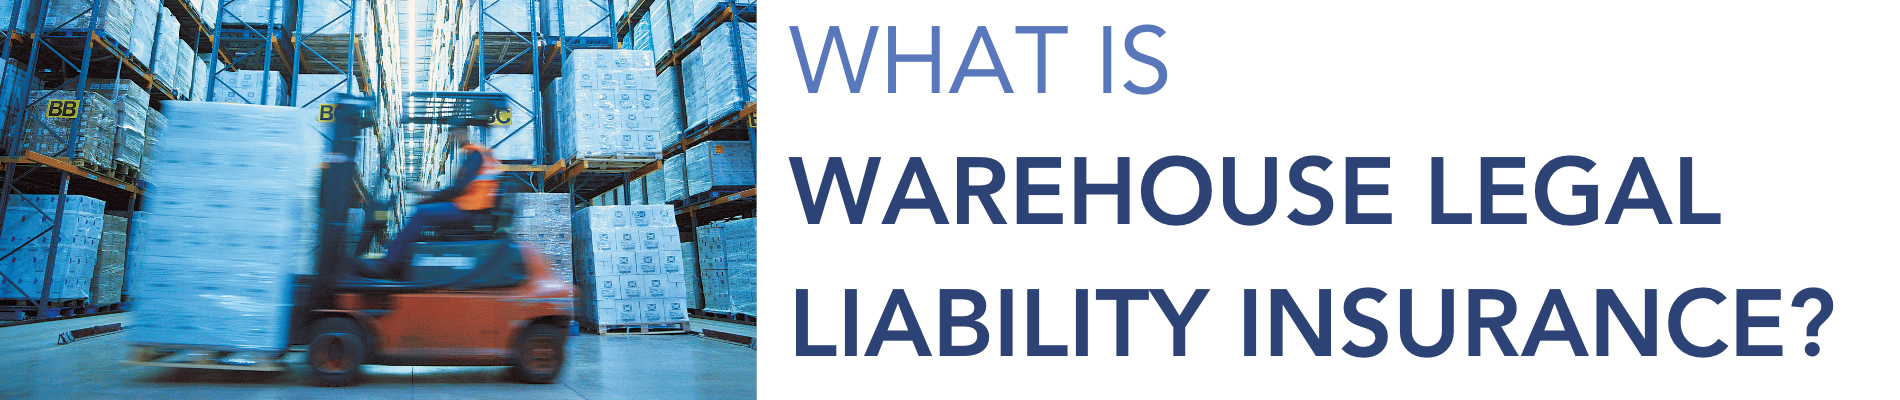 warehouse legal liability insurance